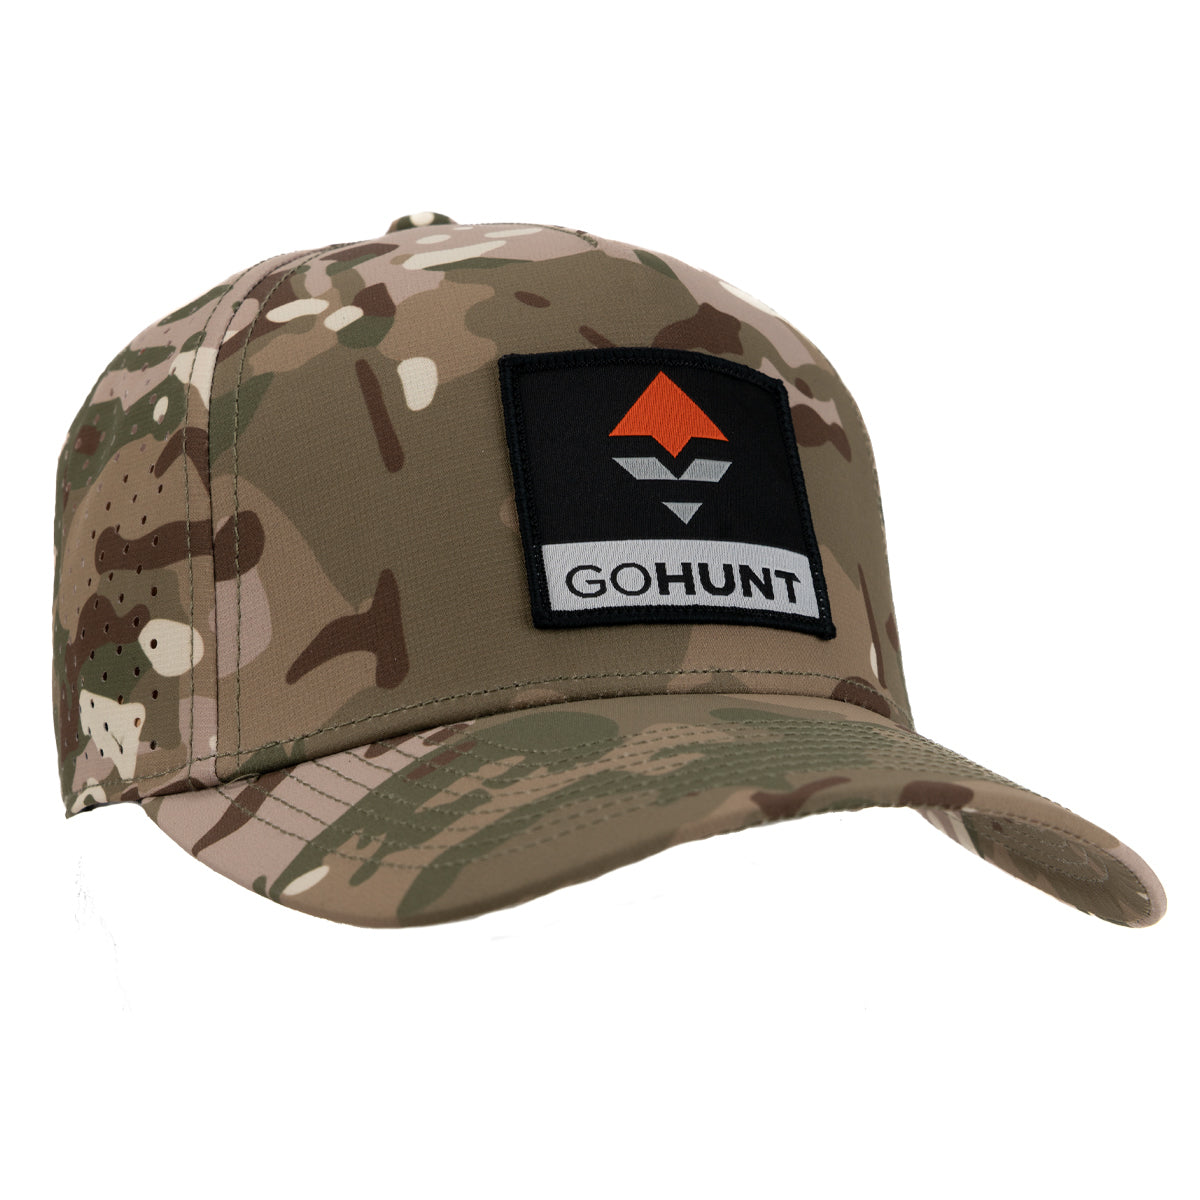 GOHUNT Hydra Hat in Ops Camo by GOHUNT | GOHUNT - GOHUNT Shop